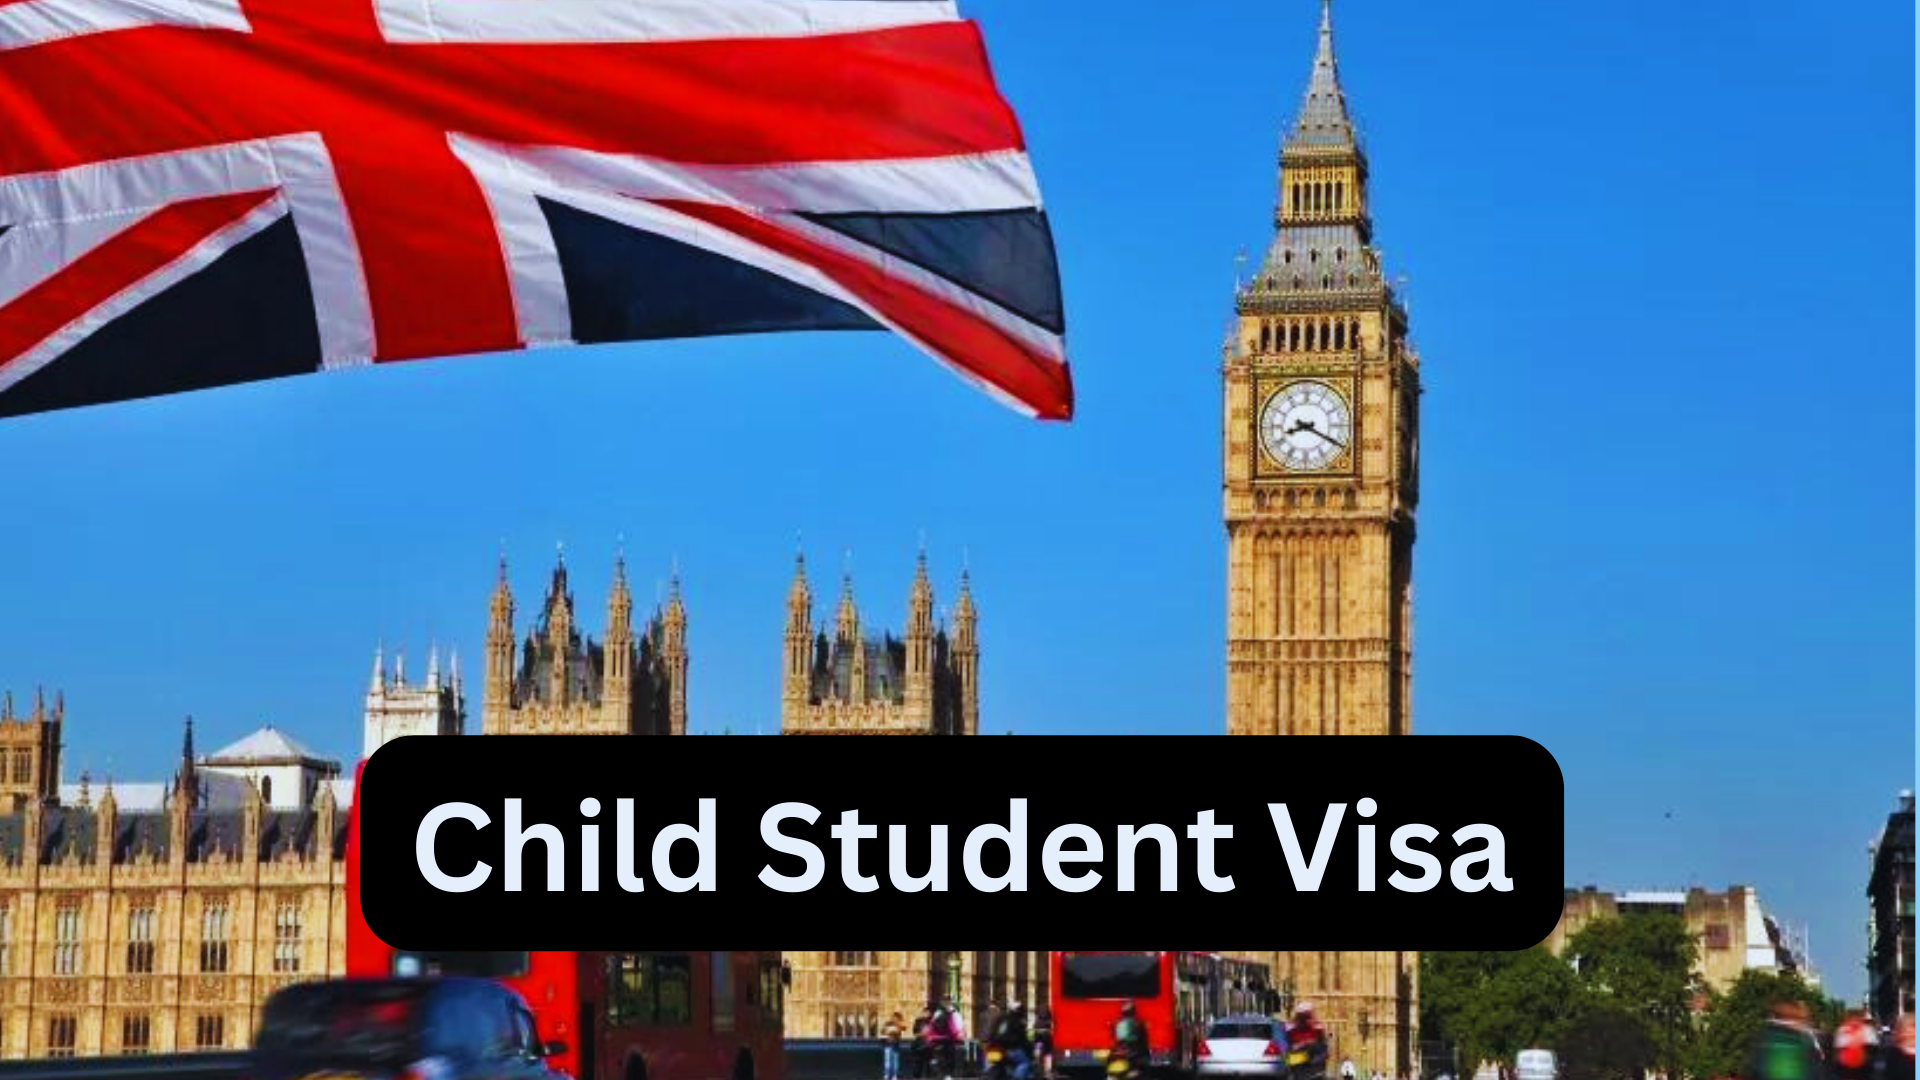 Child Student Visa